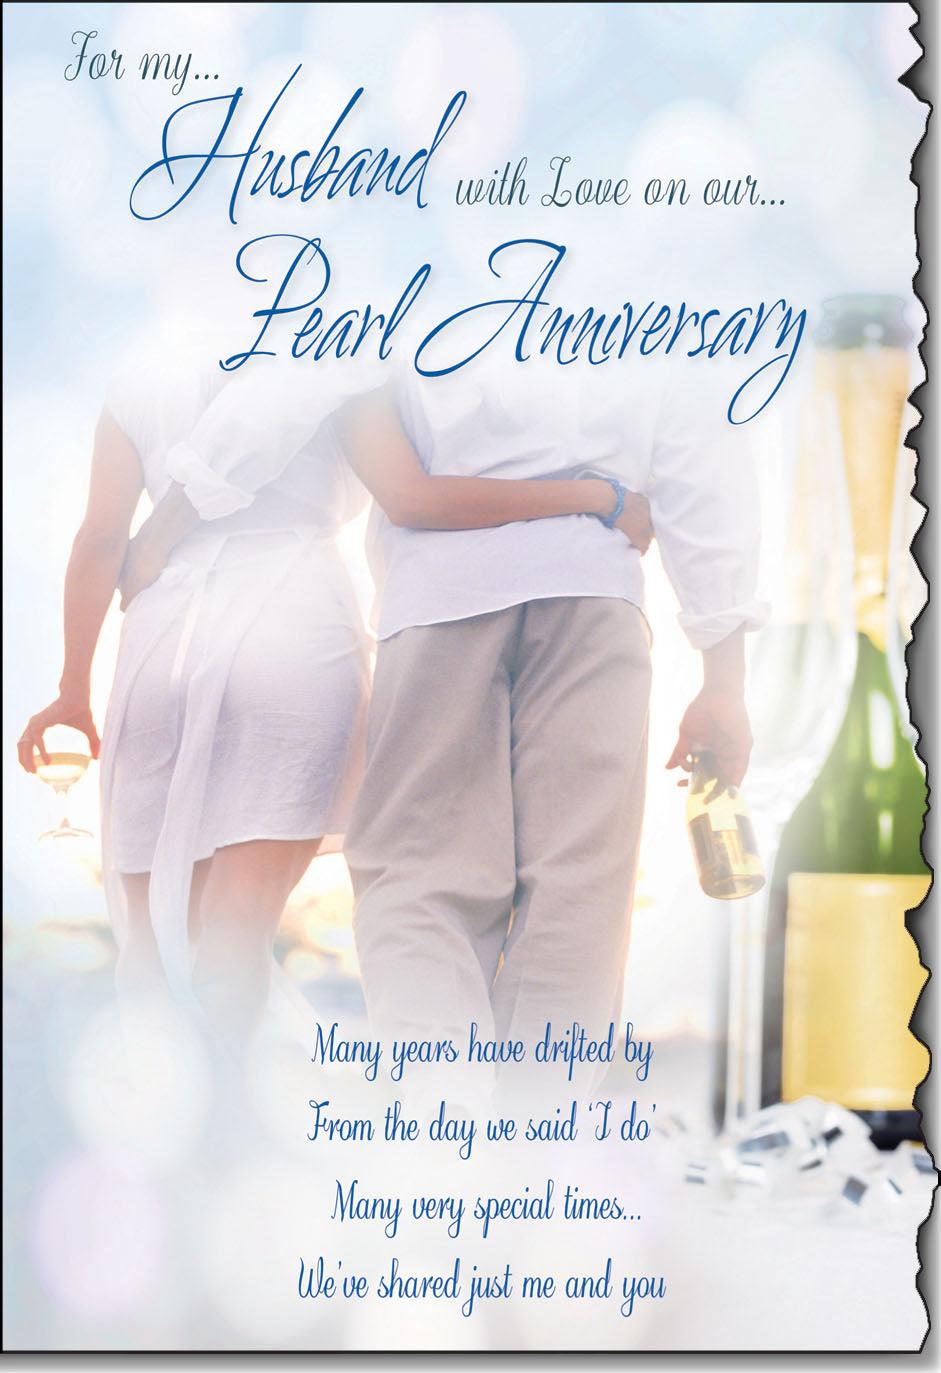 Husband Pearl anniversary card - sentimental verse